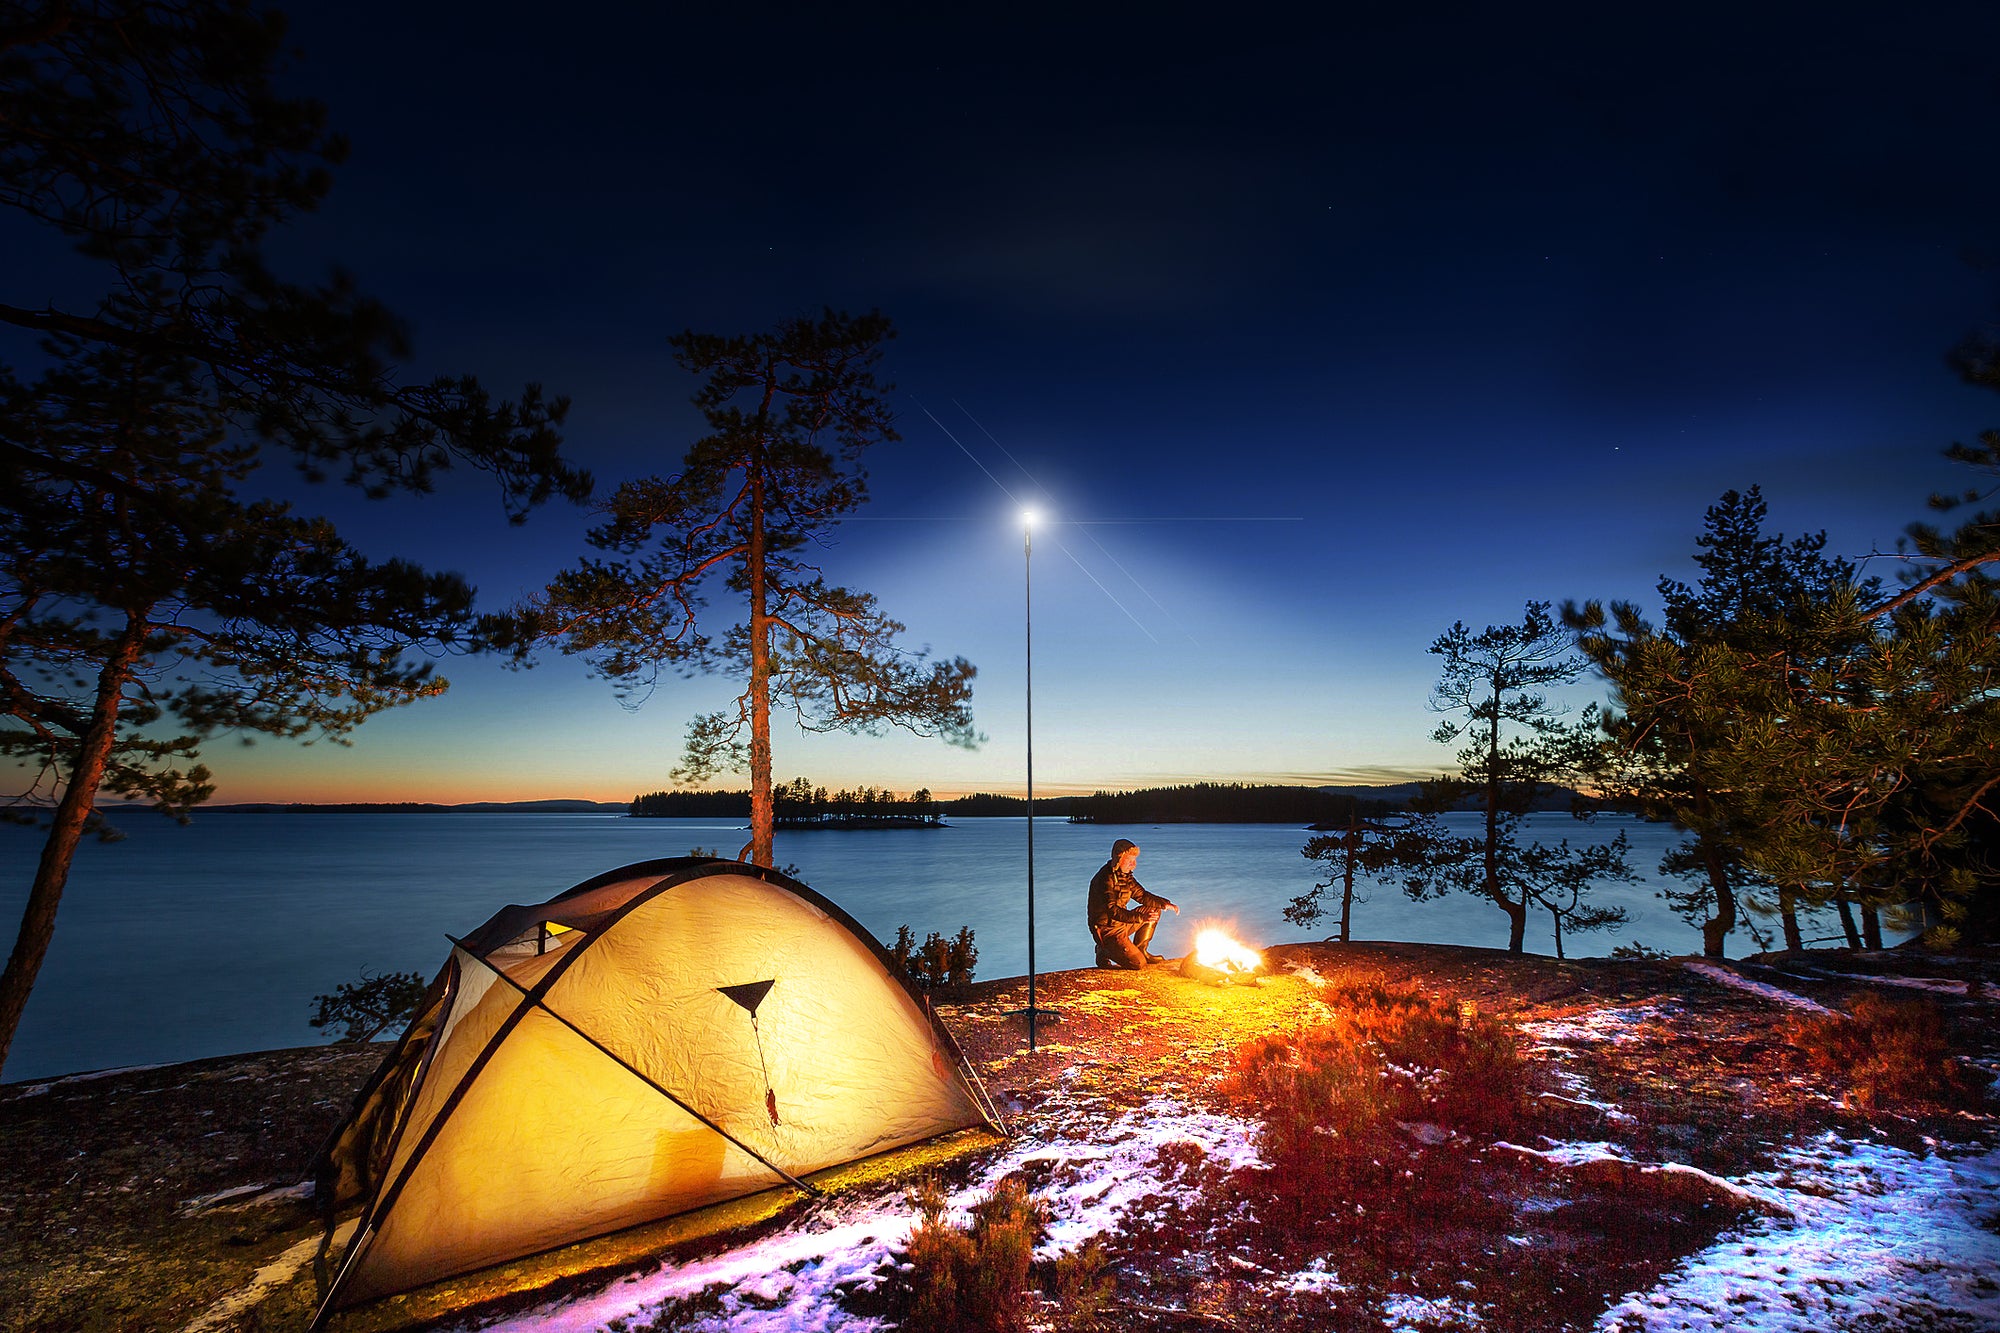 LED Camping Lantern 360 PRO (2-Pack), Super Bright Tent Lights